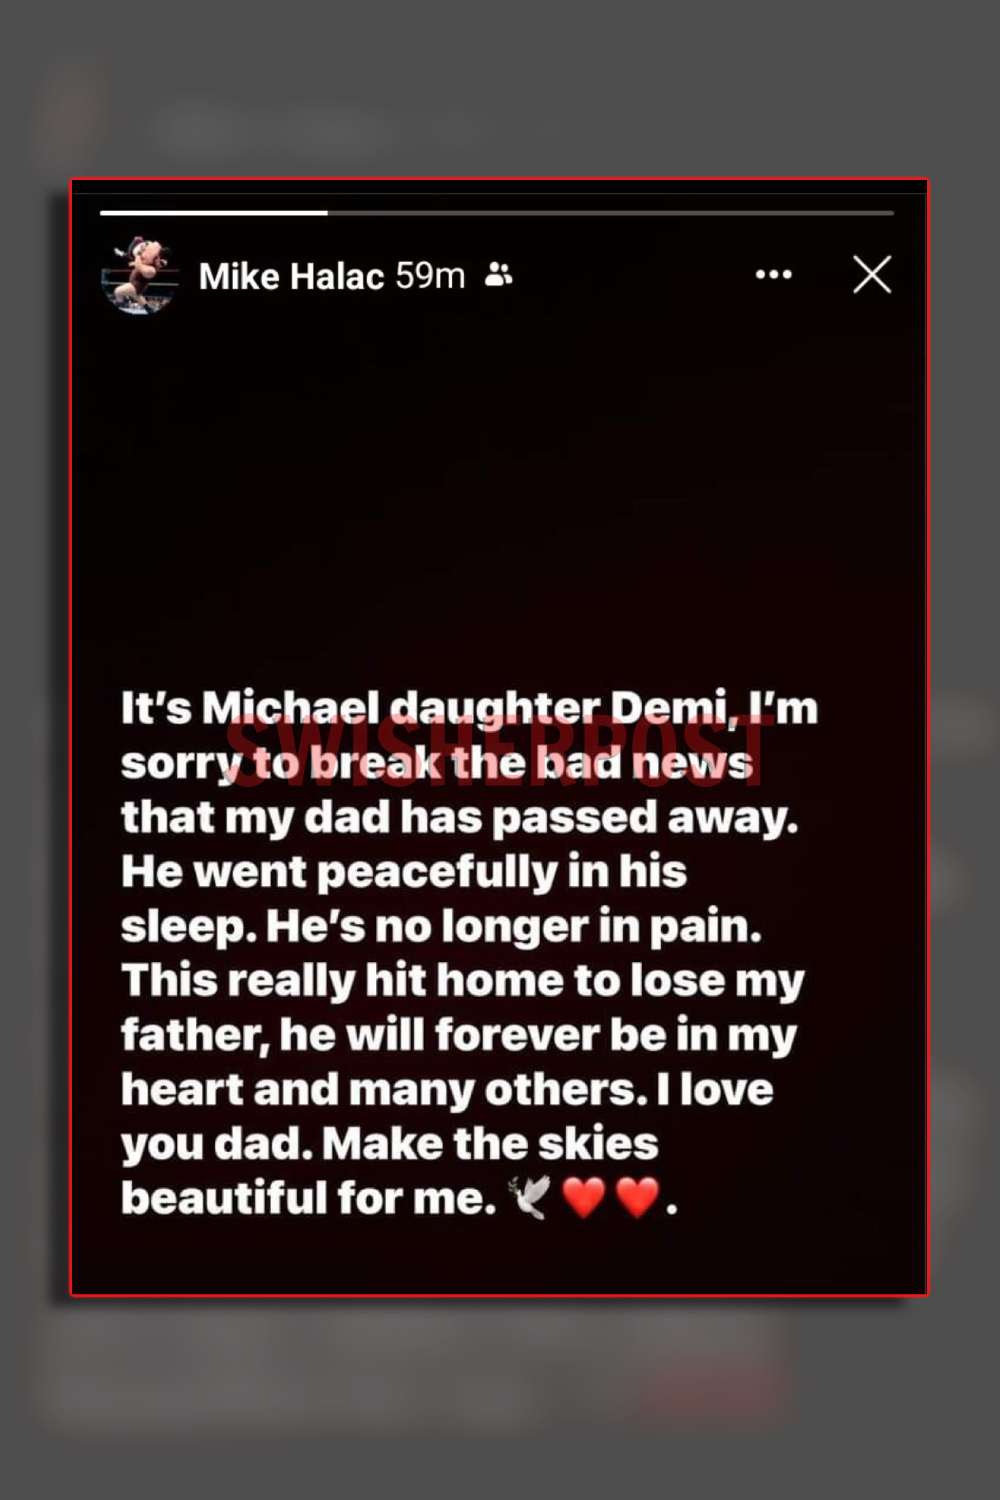 mike mantaur halac wwe star dies cause of death Demi daughter Facebook post